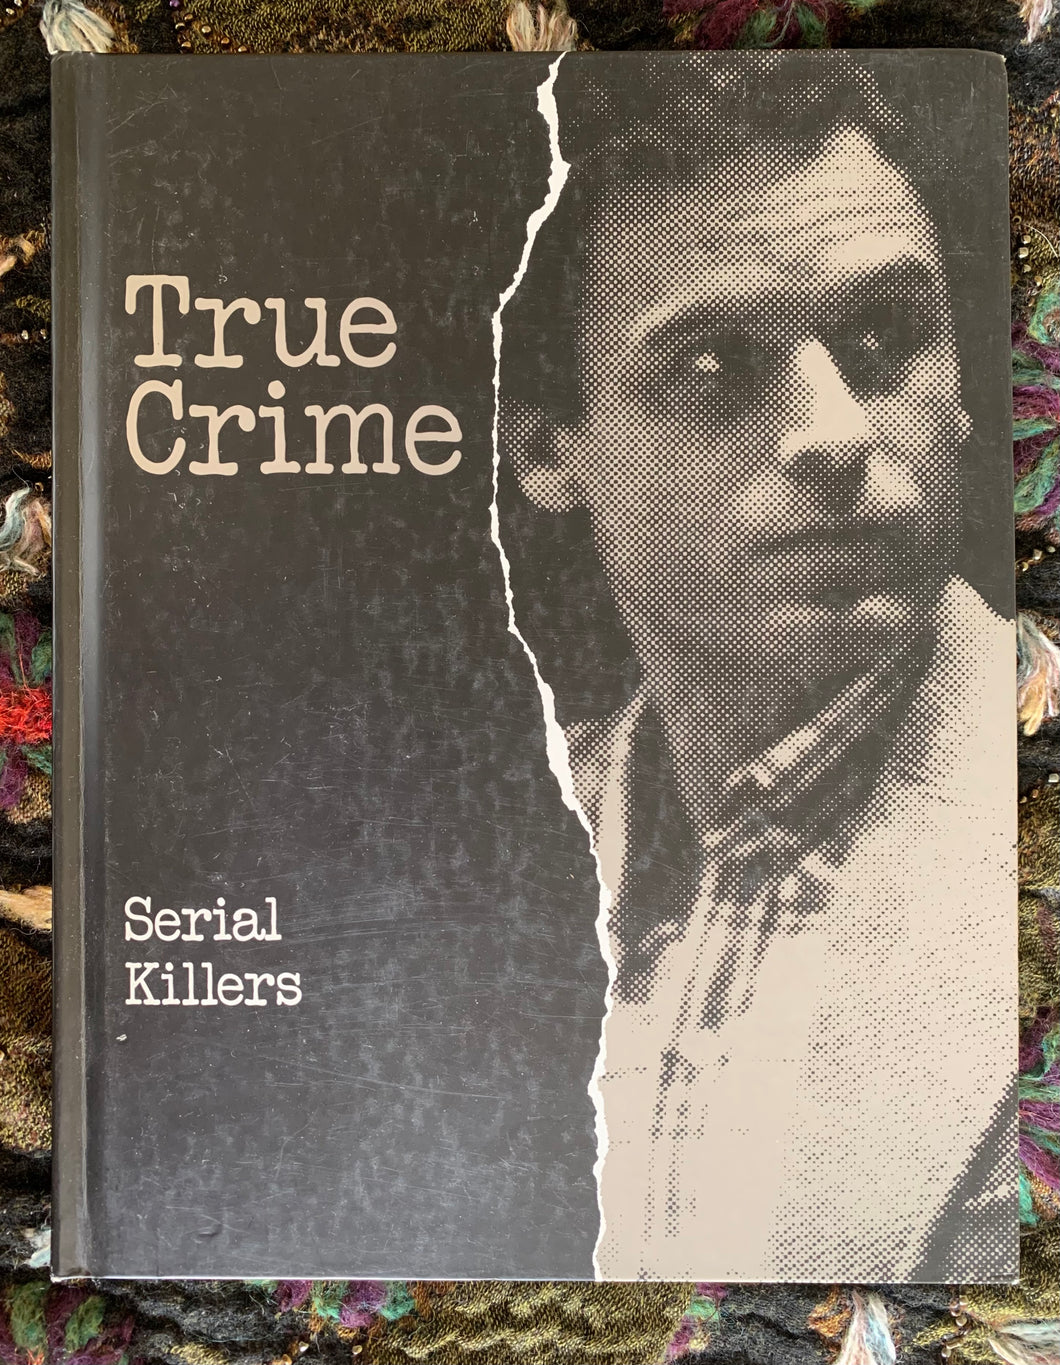 Time-Life True Crime: Serial Killers